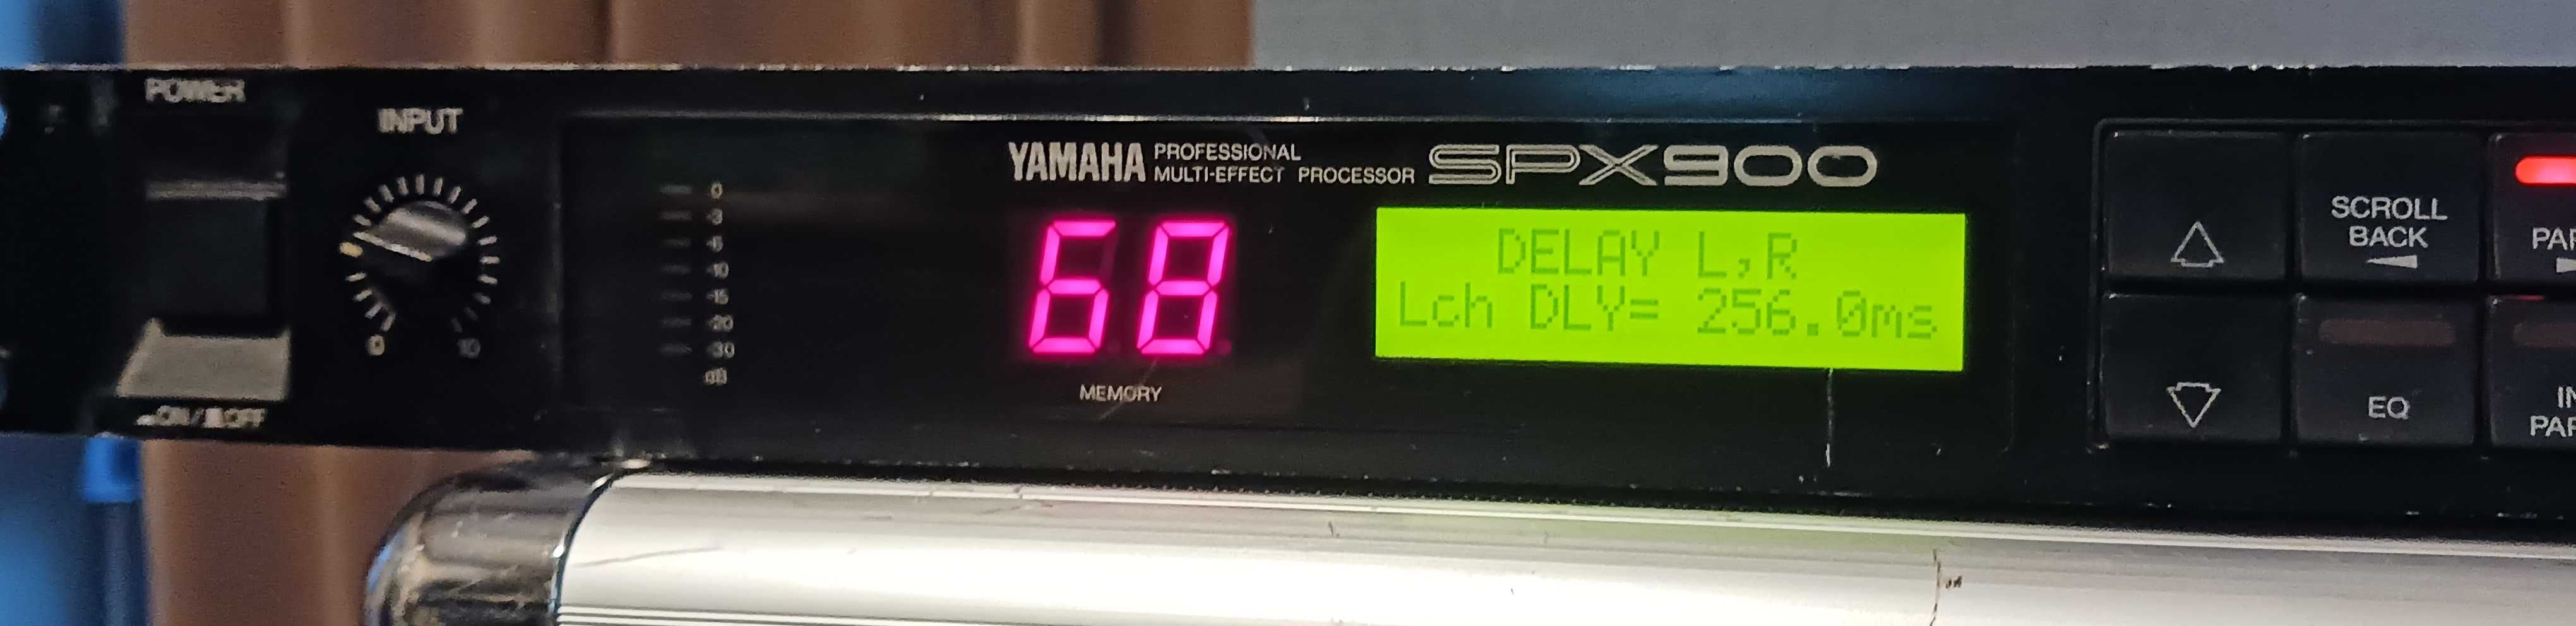 YAMAHA SPX 900 .Procesor, multiefekt. Reverb,delay,chorus.